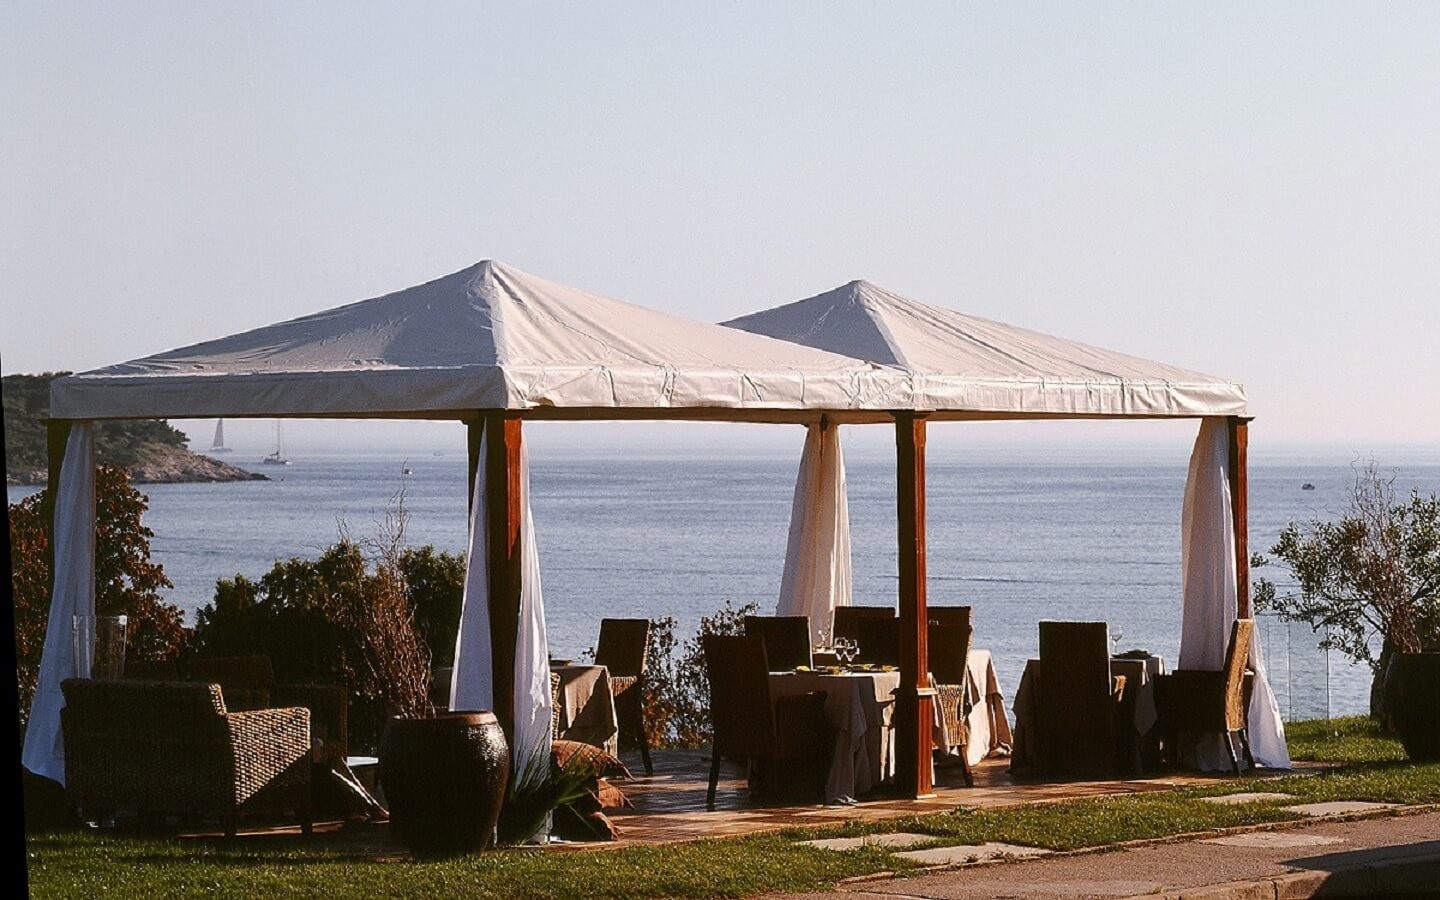 Design Hotel Valsabbion, direkt am Meer bei Pula, Istrien, Kroatien.